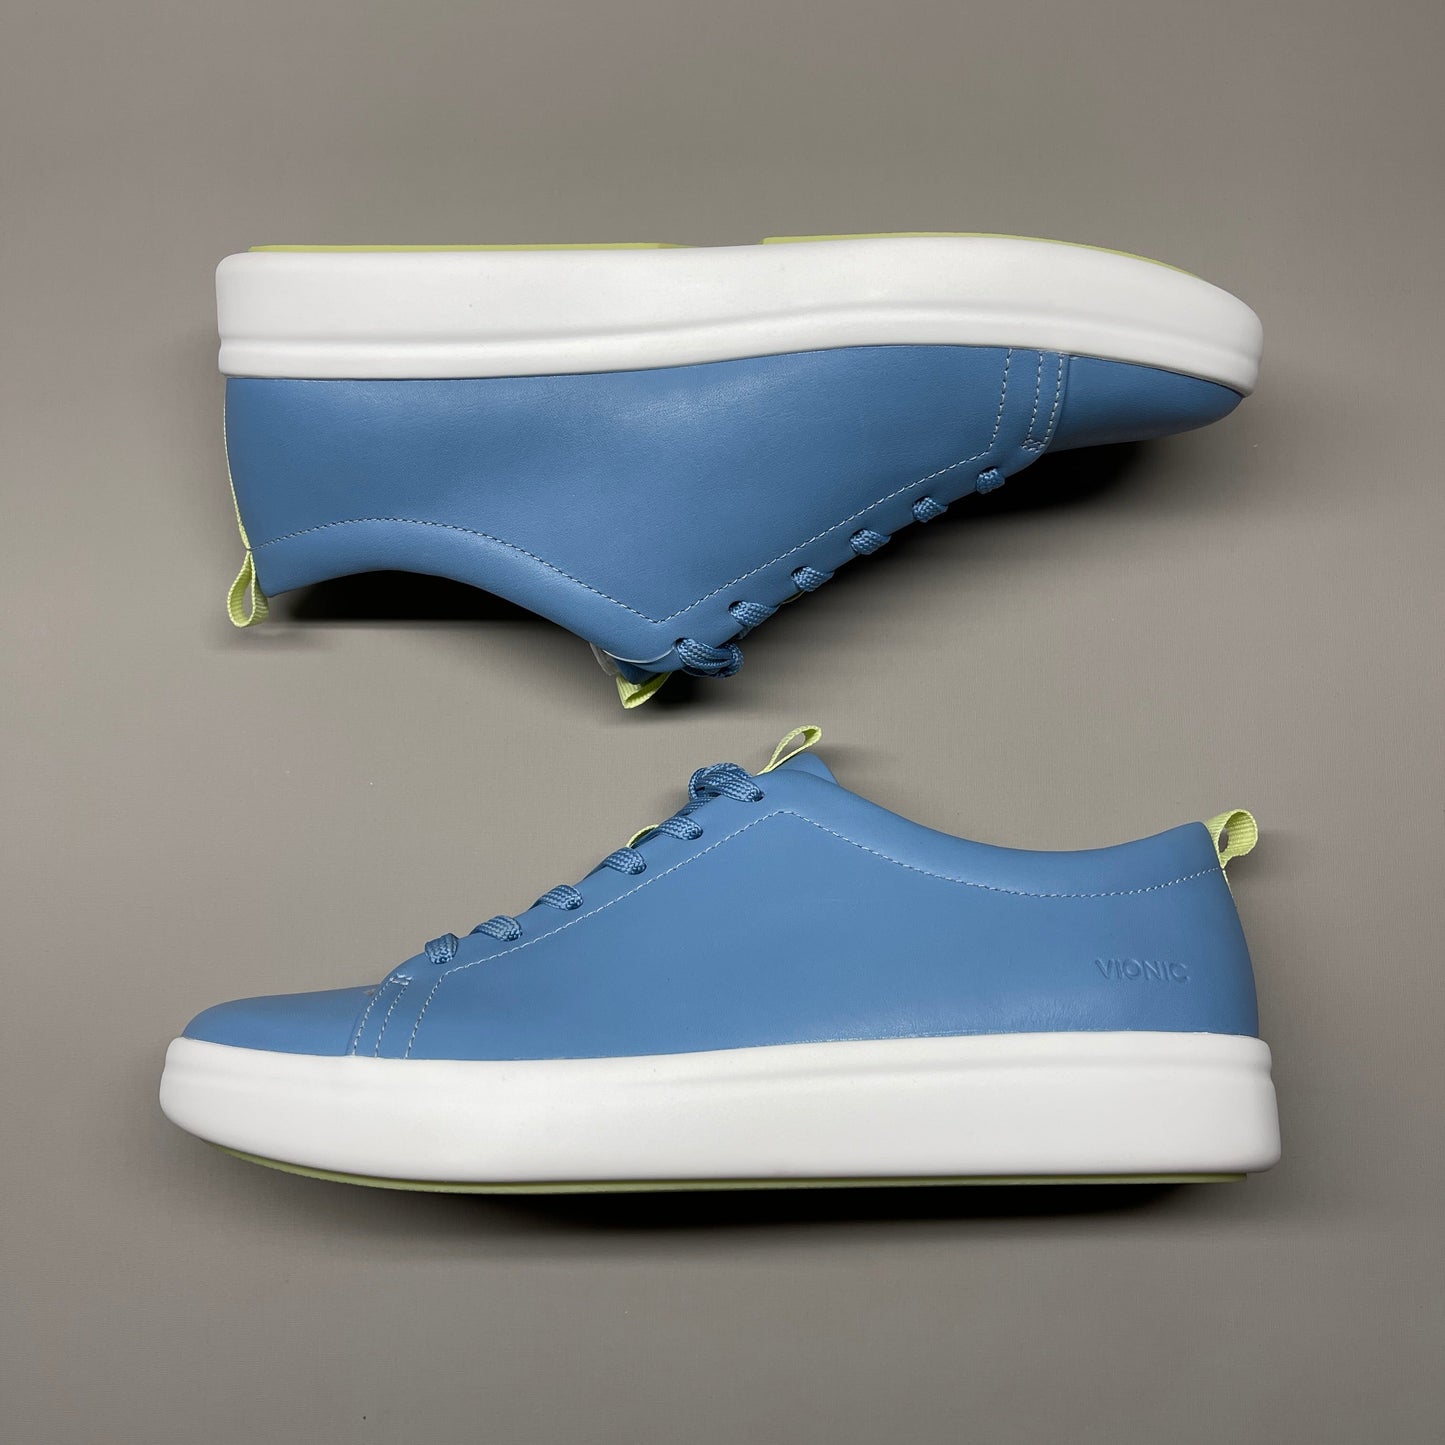 VIONIC Paisley Leather Shoe Women's SZ 7 Sky Blue (New)